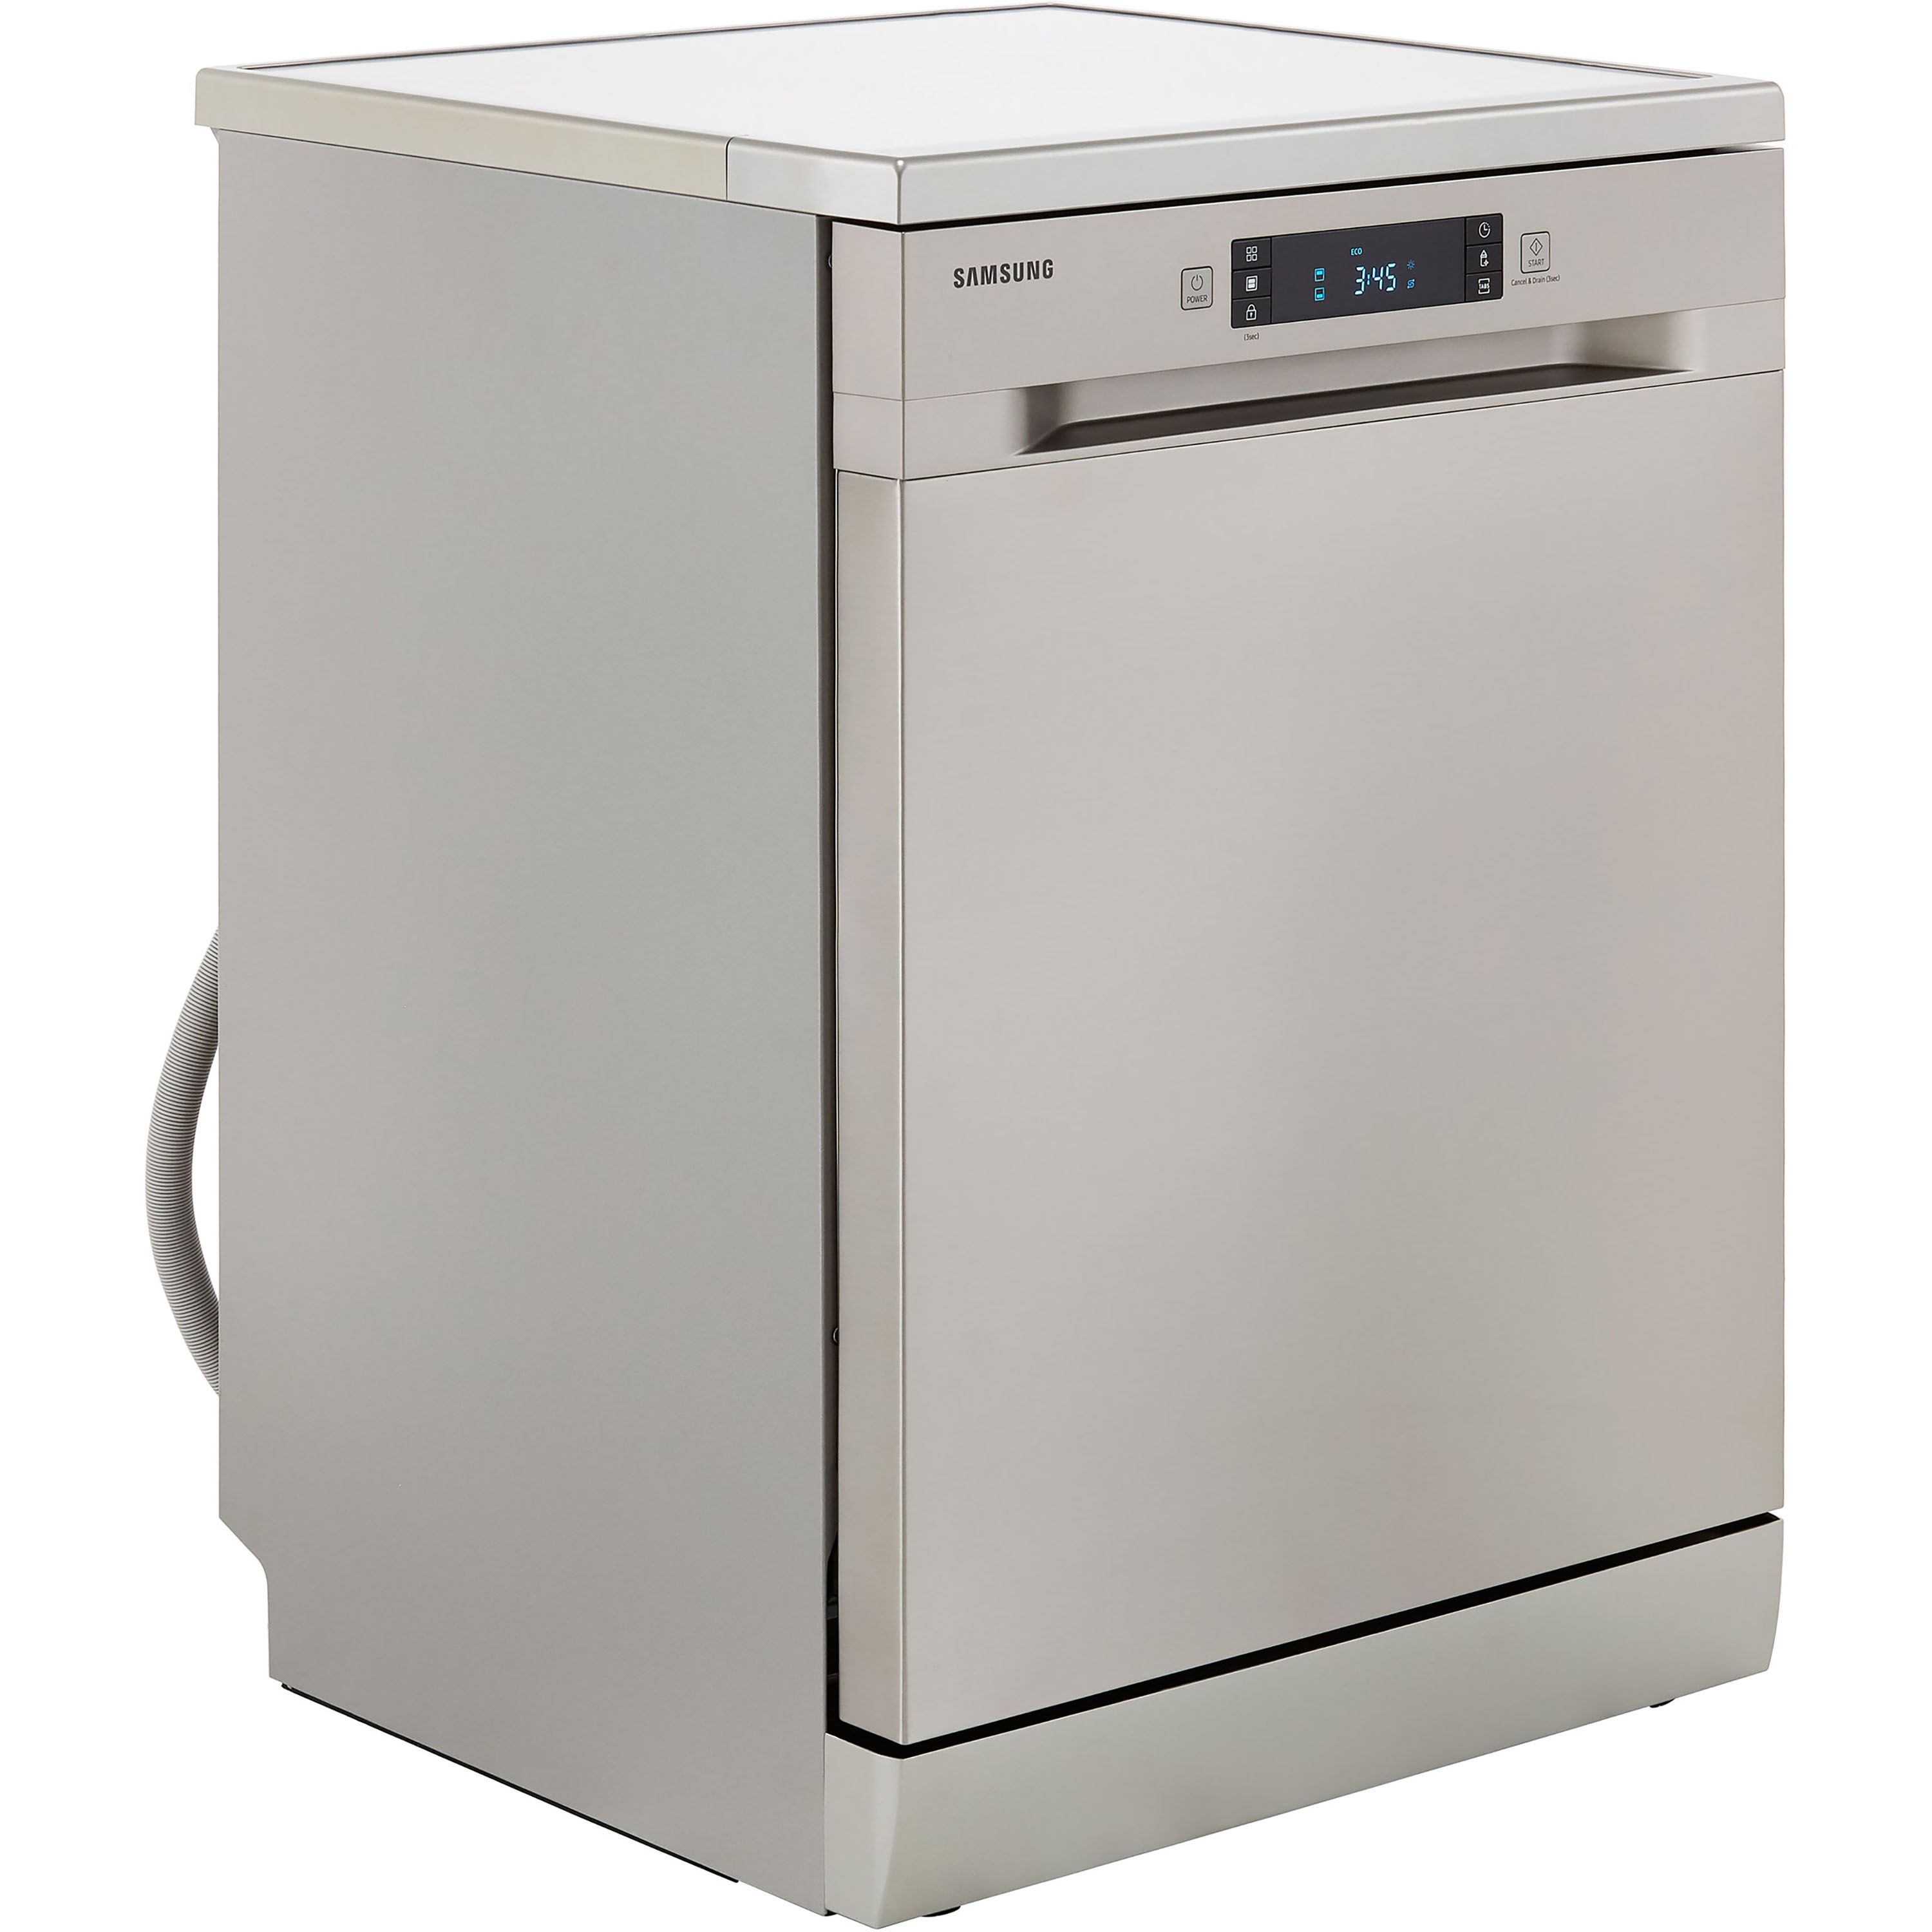 Samsung DW60M6050FS Integrated Full size Dishwasher